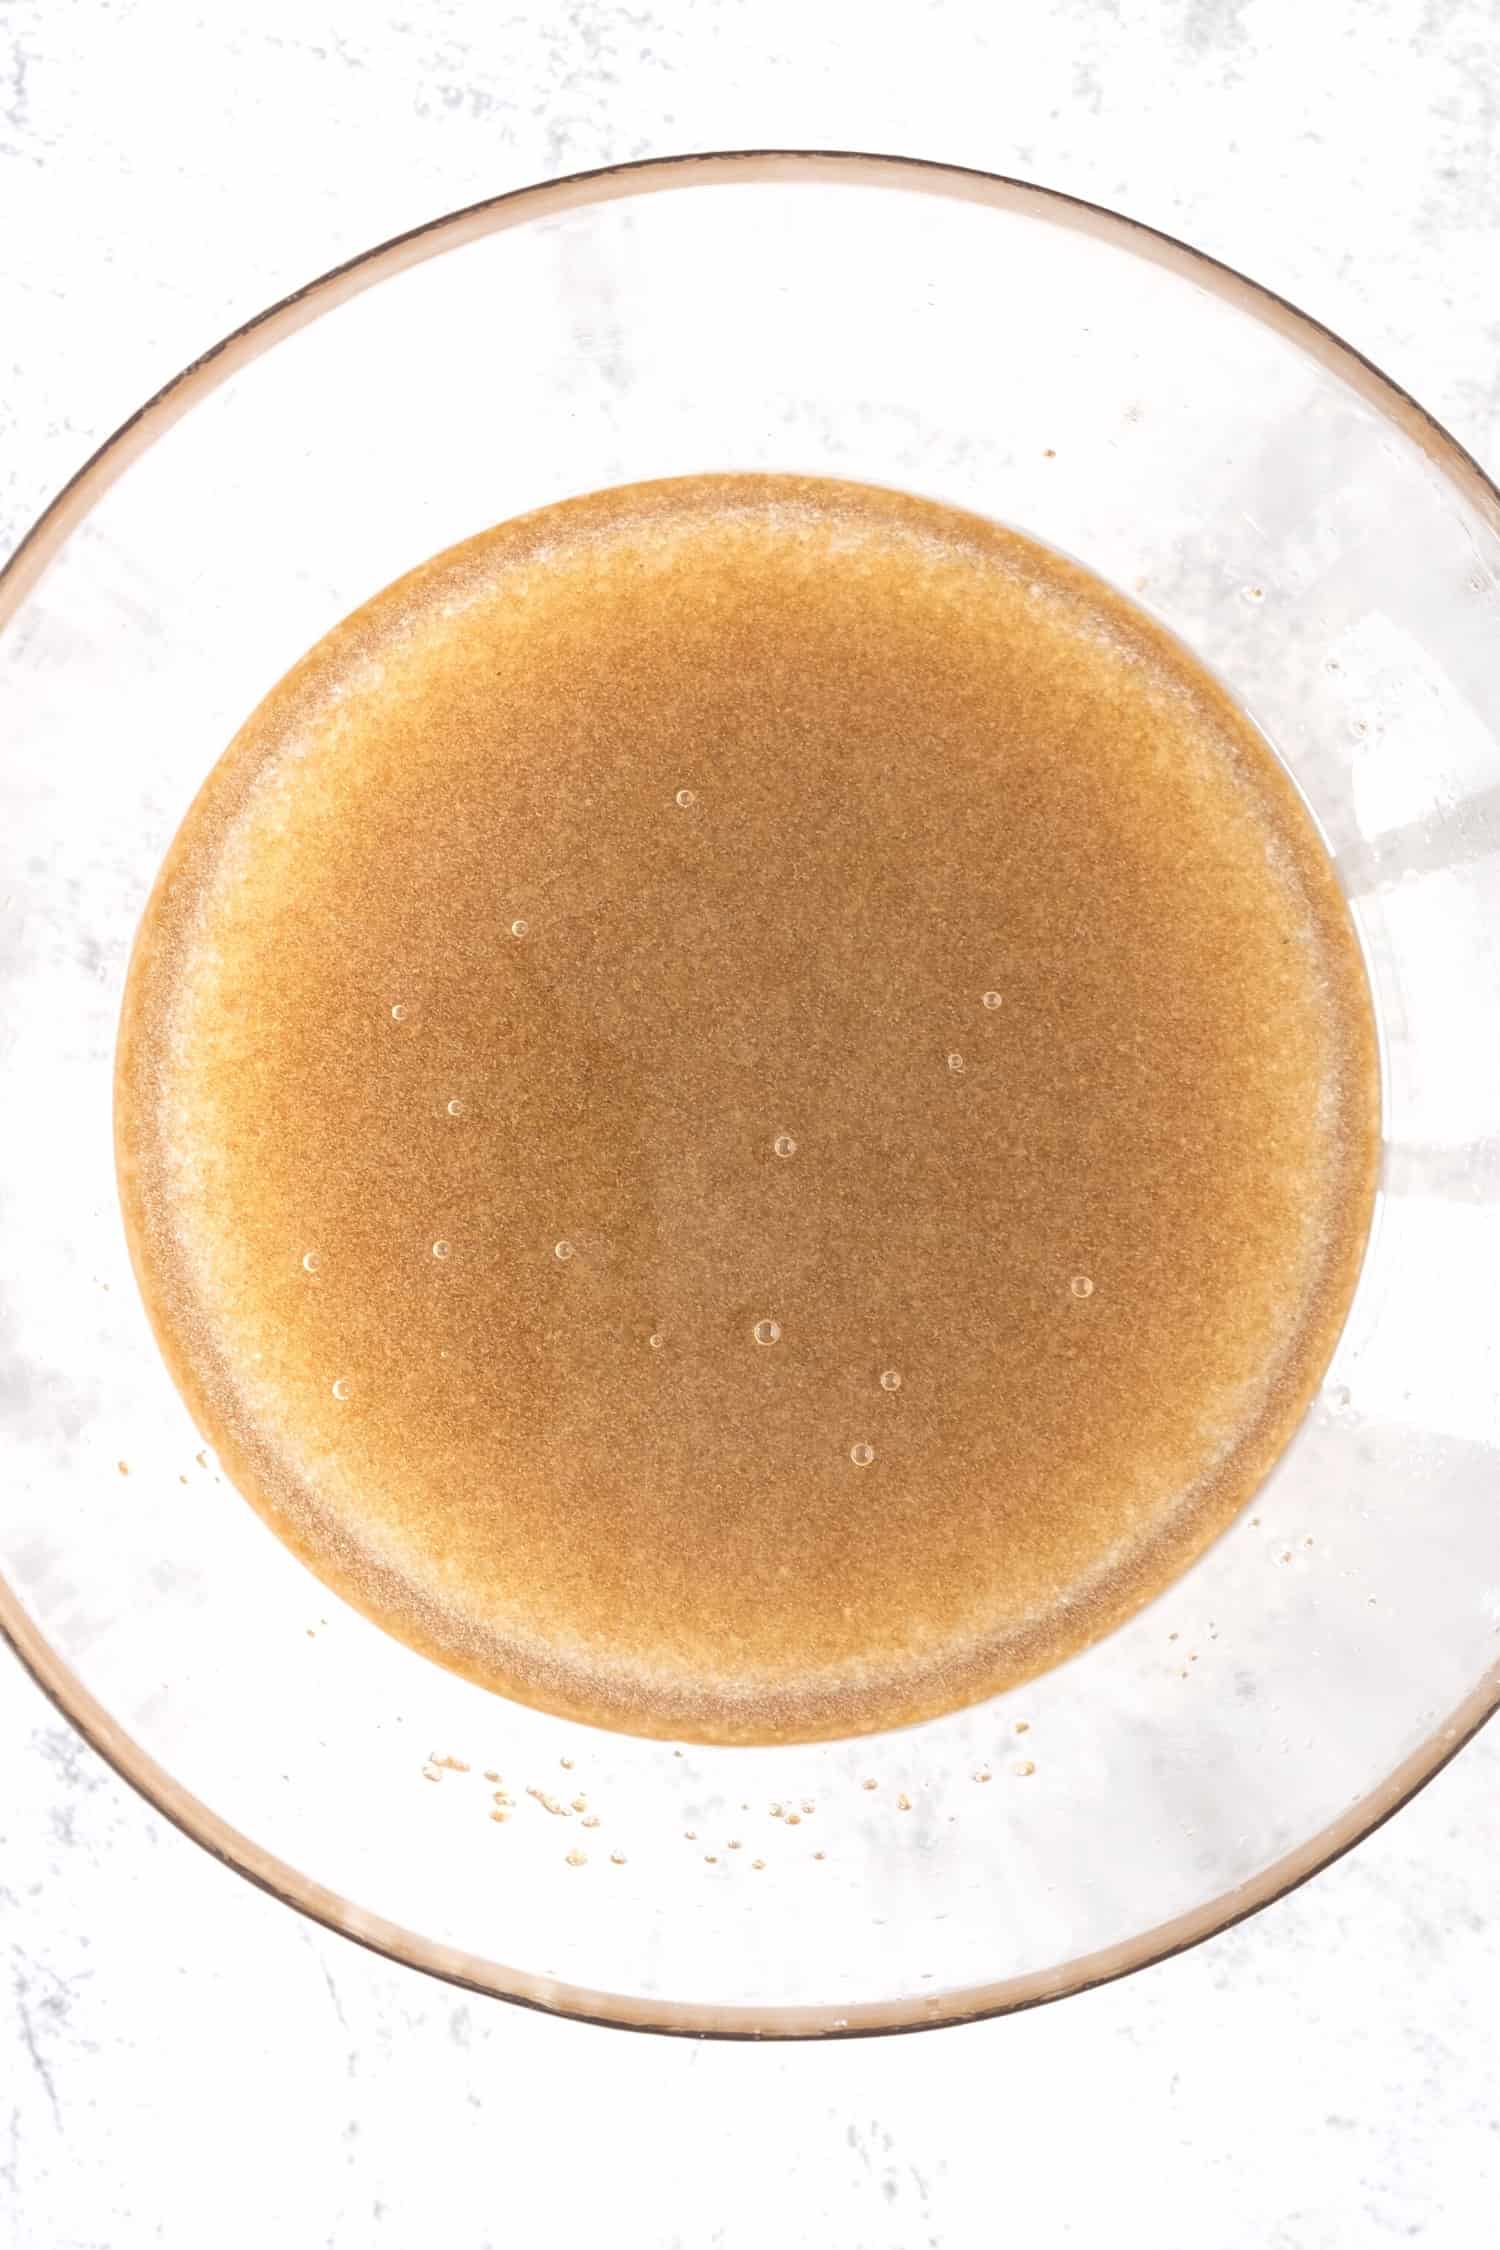 Brown sugar mixture in glass bowl.